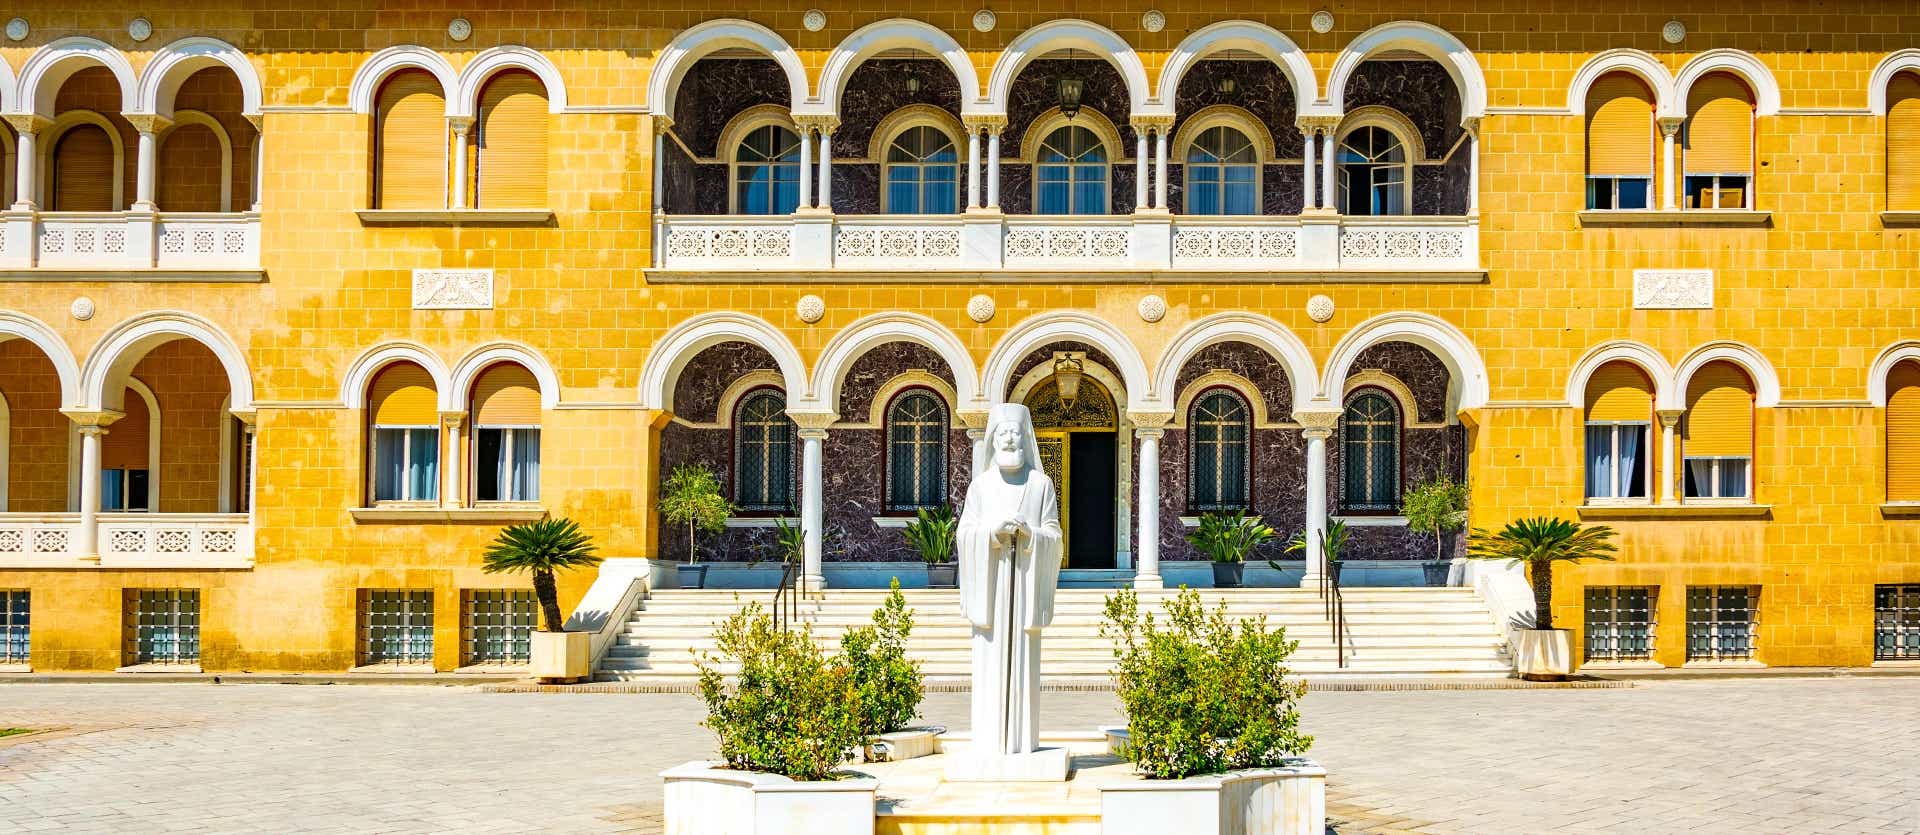 Palacio del Arzobispo <span class="iconos separador"></span> Nicosia